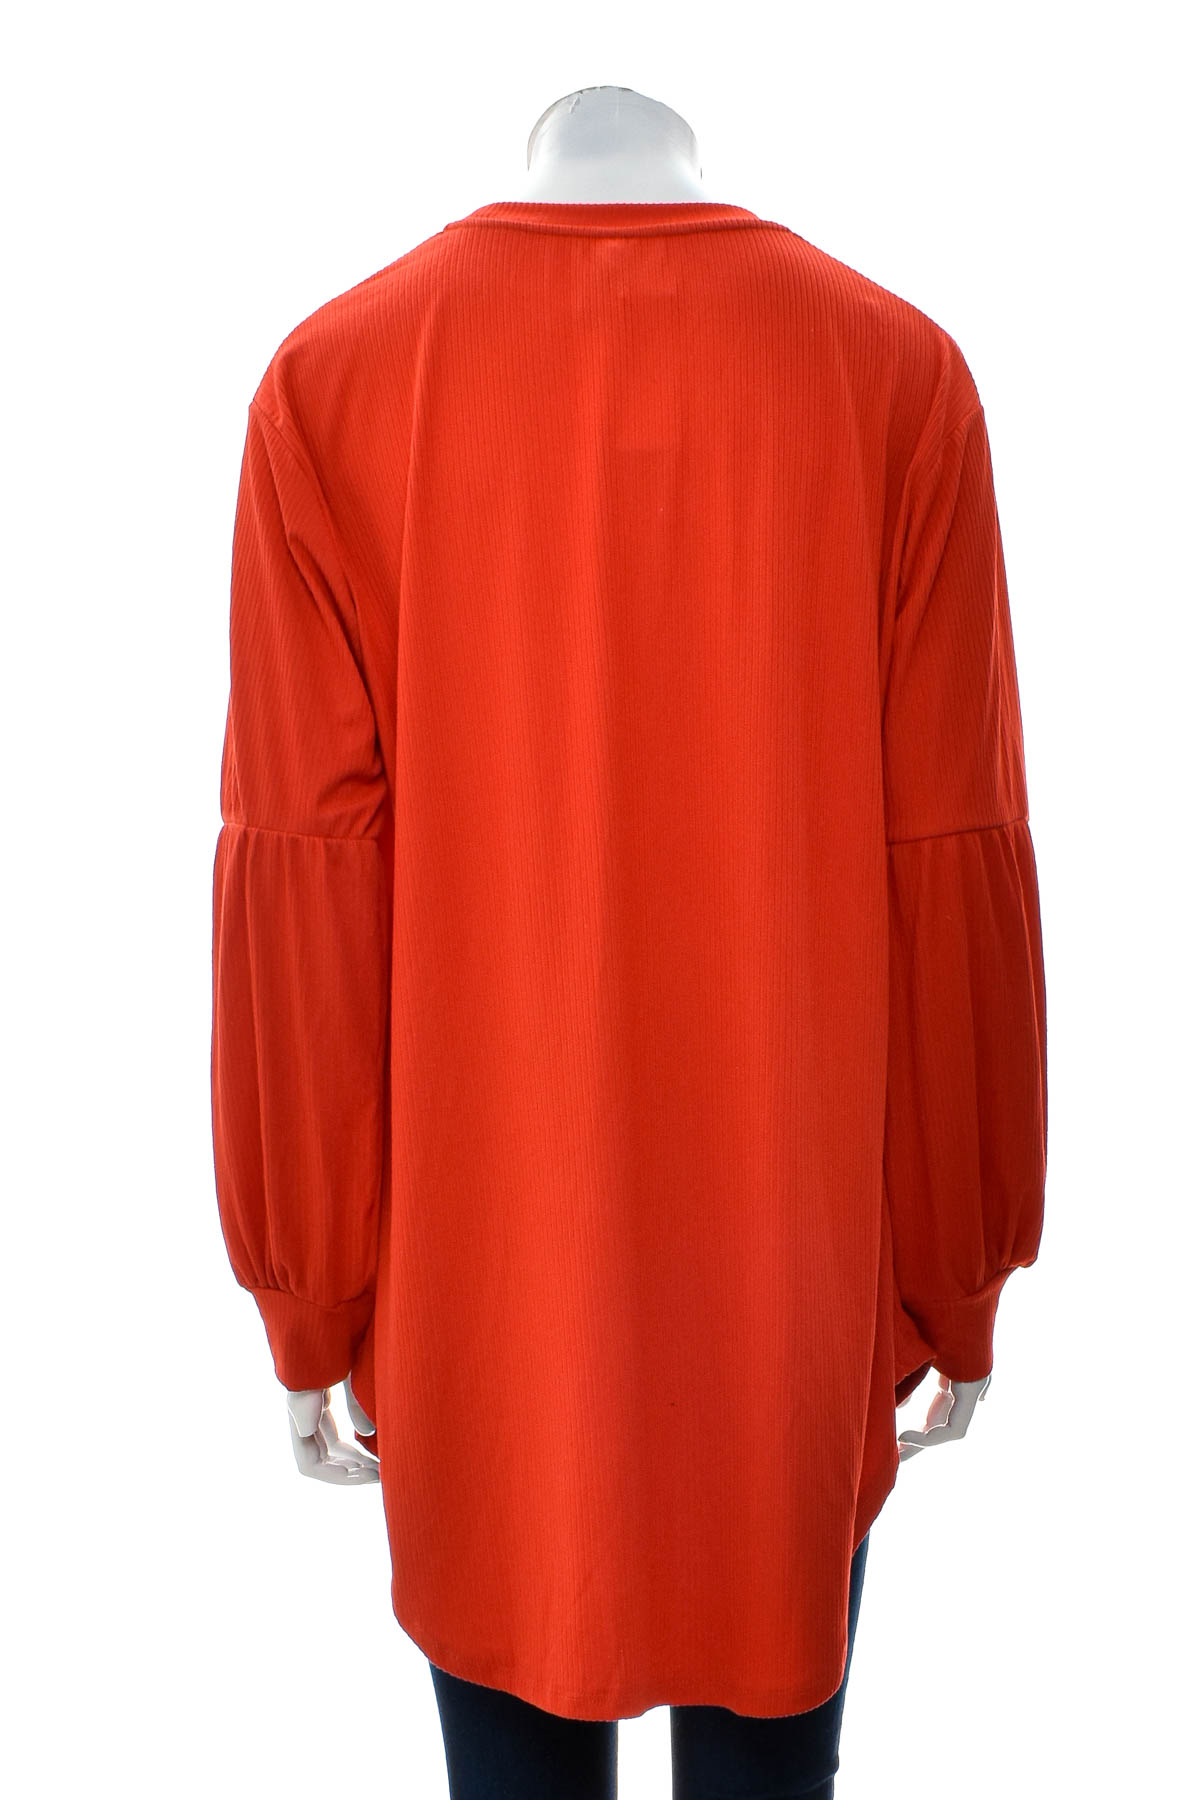 Women's blouse - MANGO BASICS - 1